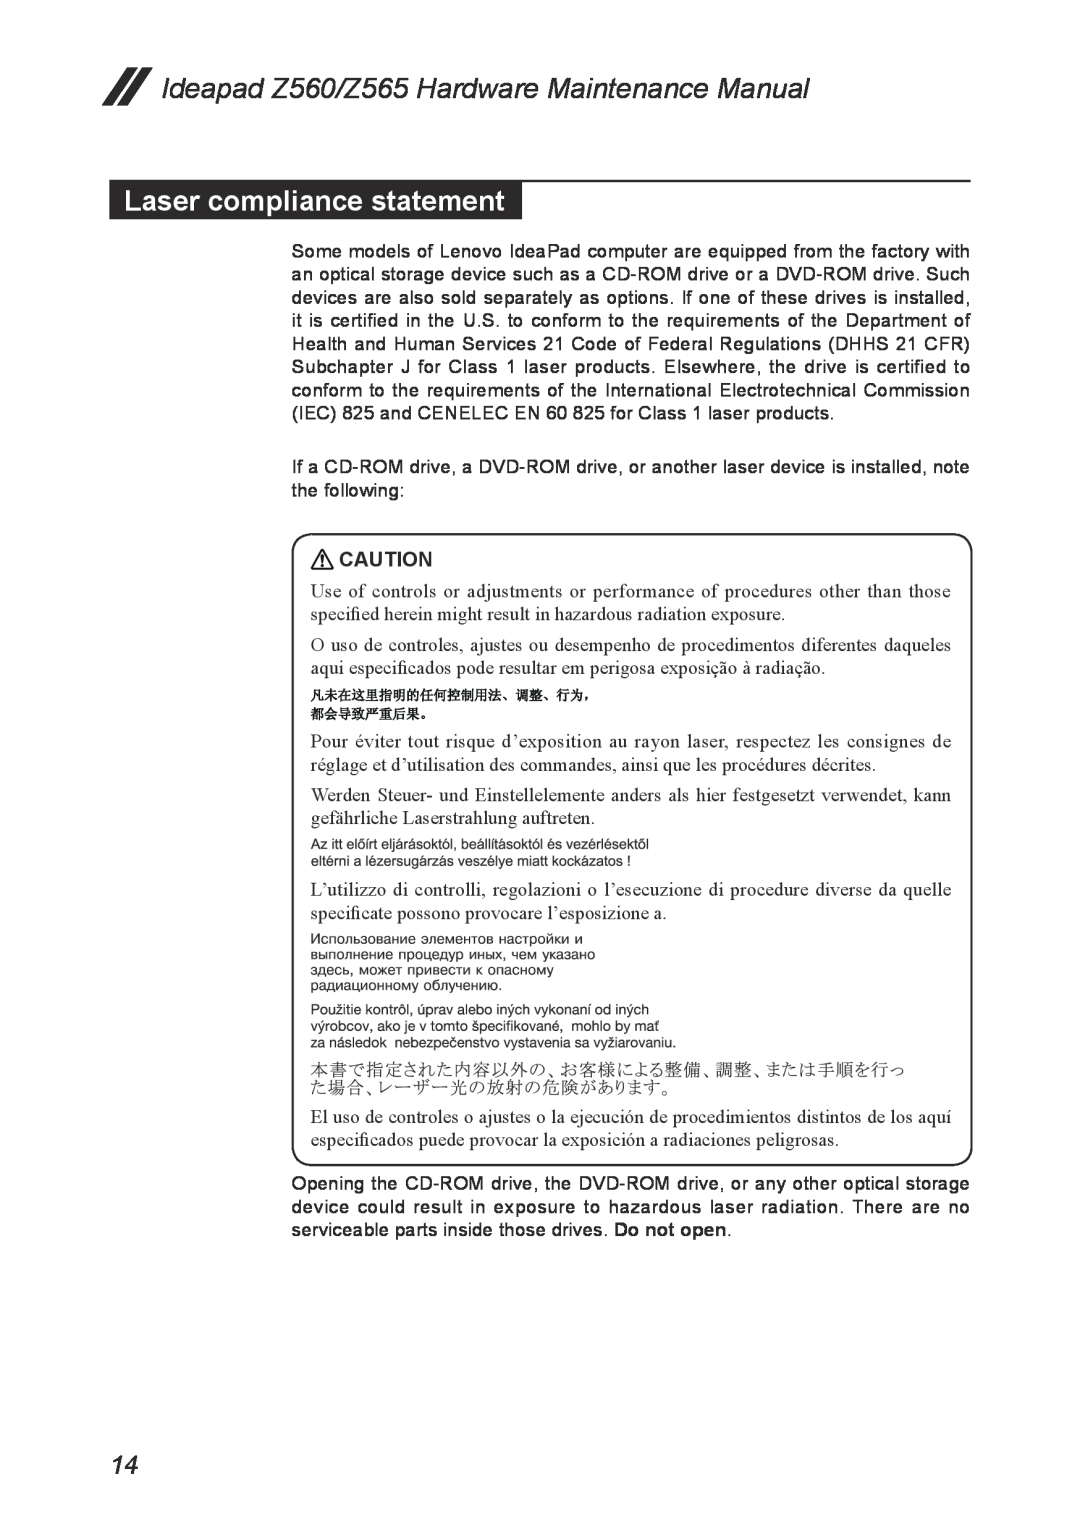 Lenovo manual Laser compliance statement, Ideapad Z560/Z565 Hardware Maintenance Manual 